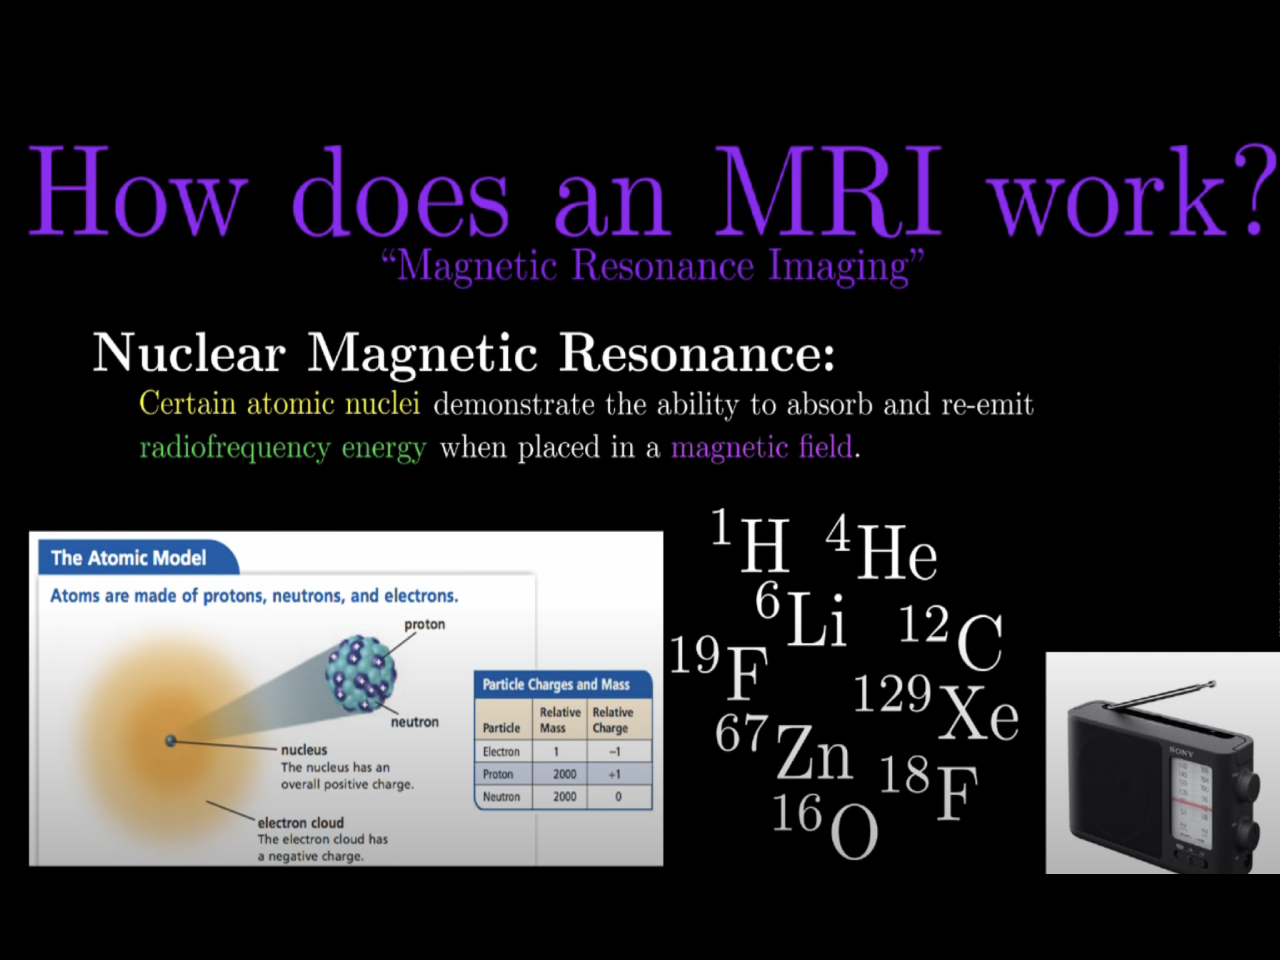 How MRI Works - Part 1 - NMR Basics